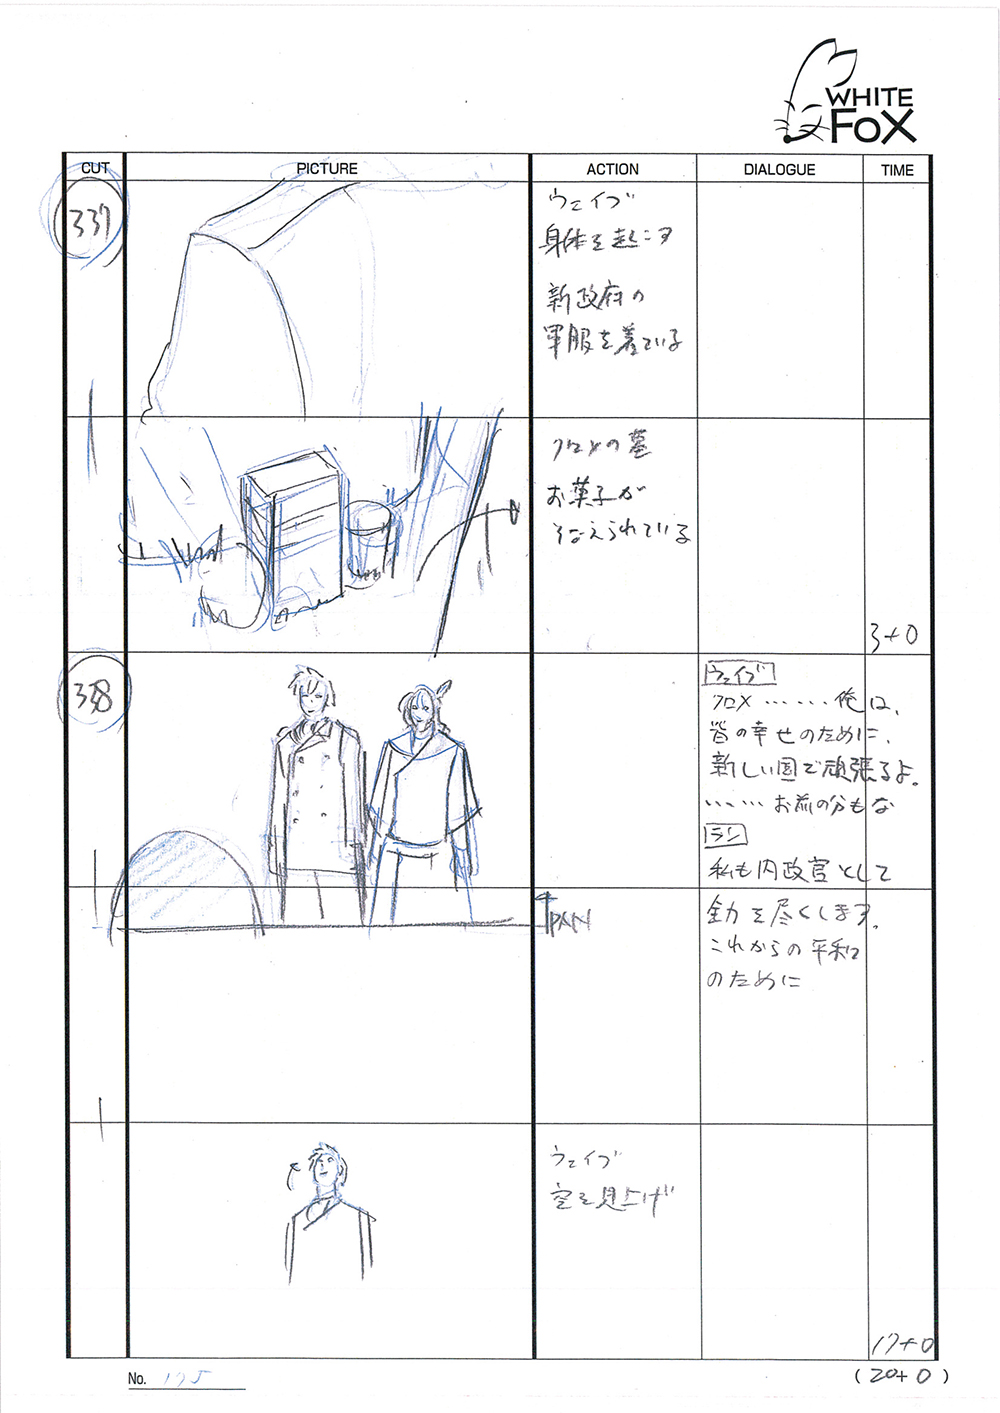 Akame ga Kill Episode 24 Storyboard Leak 180